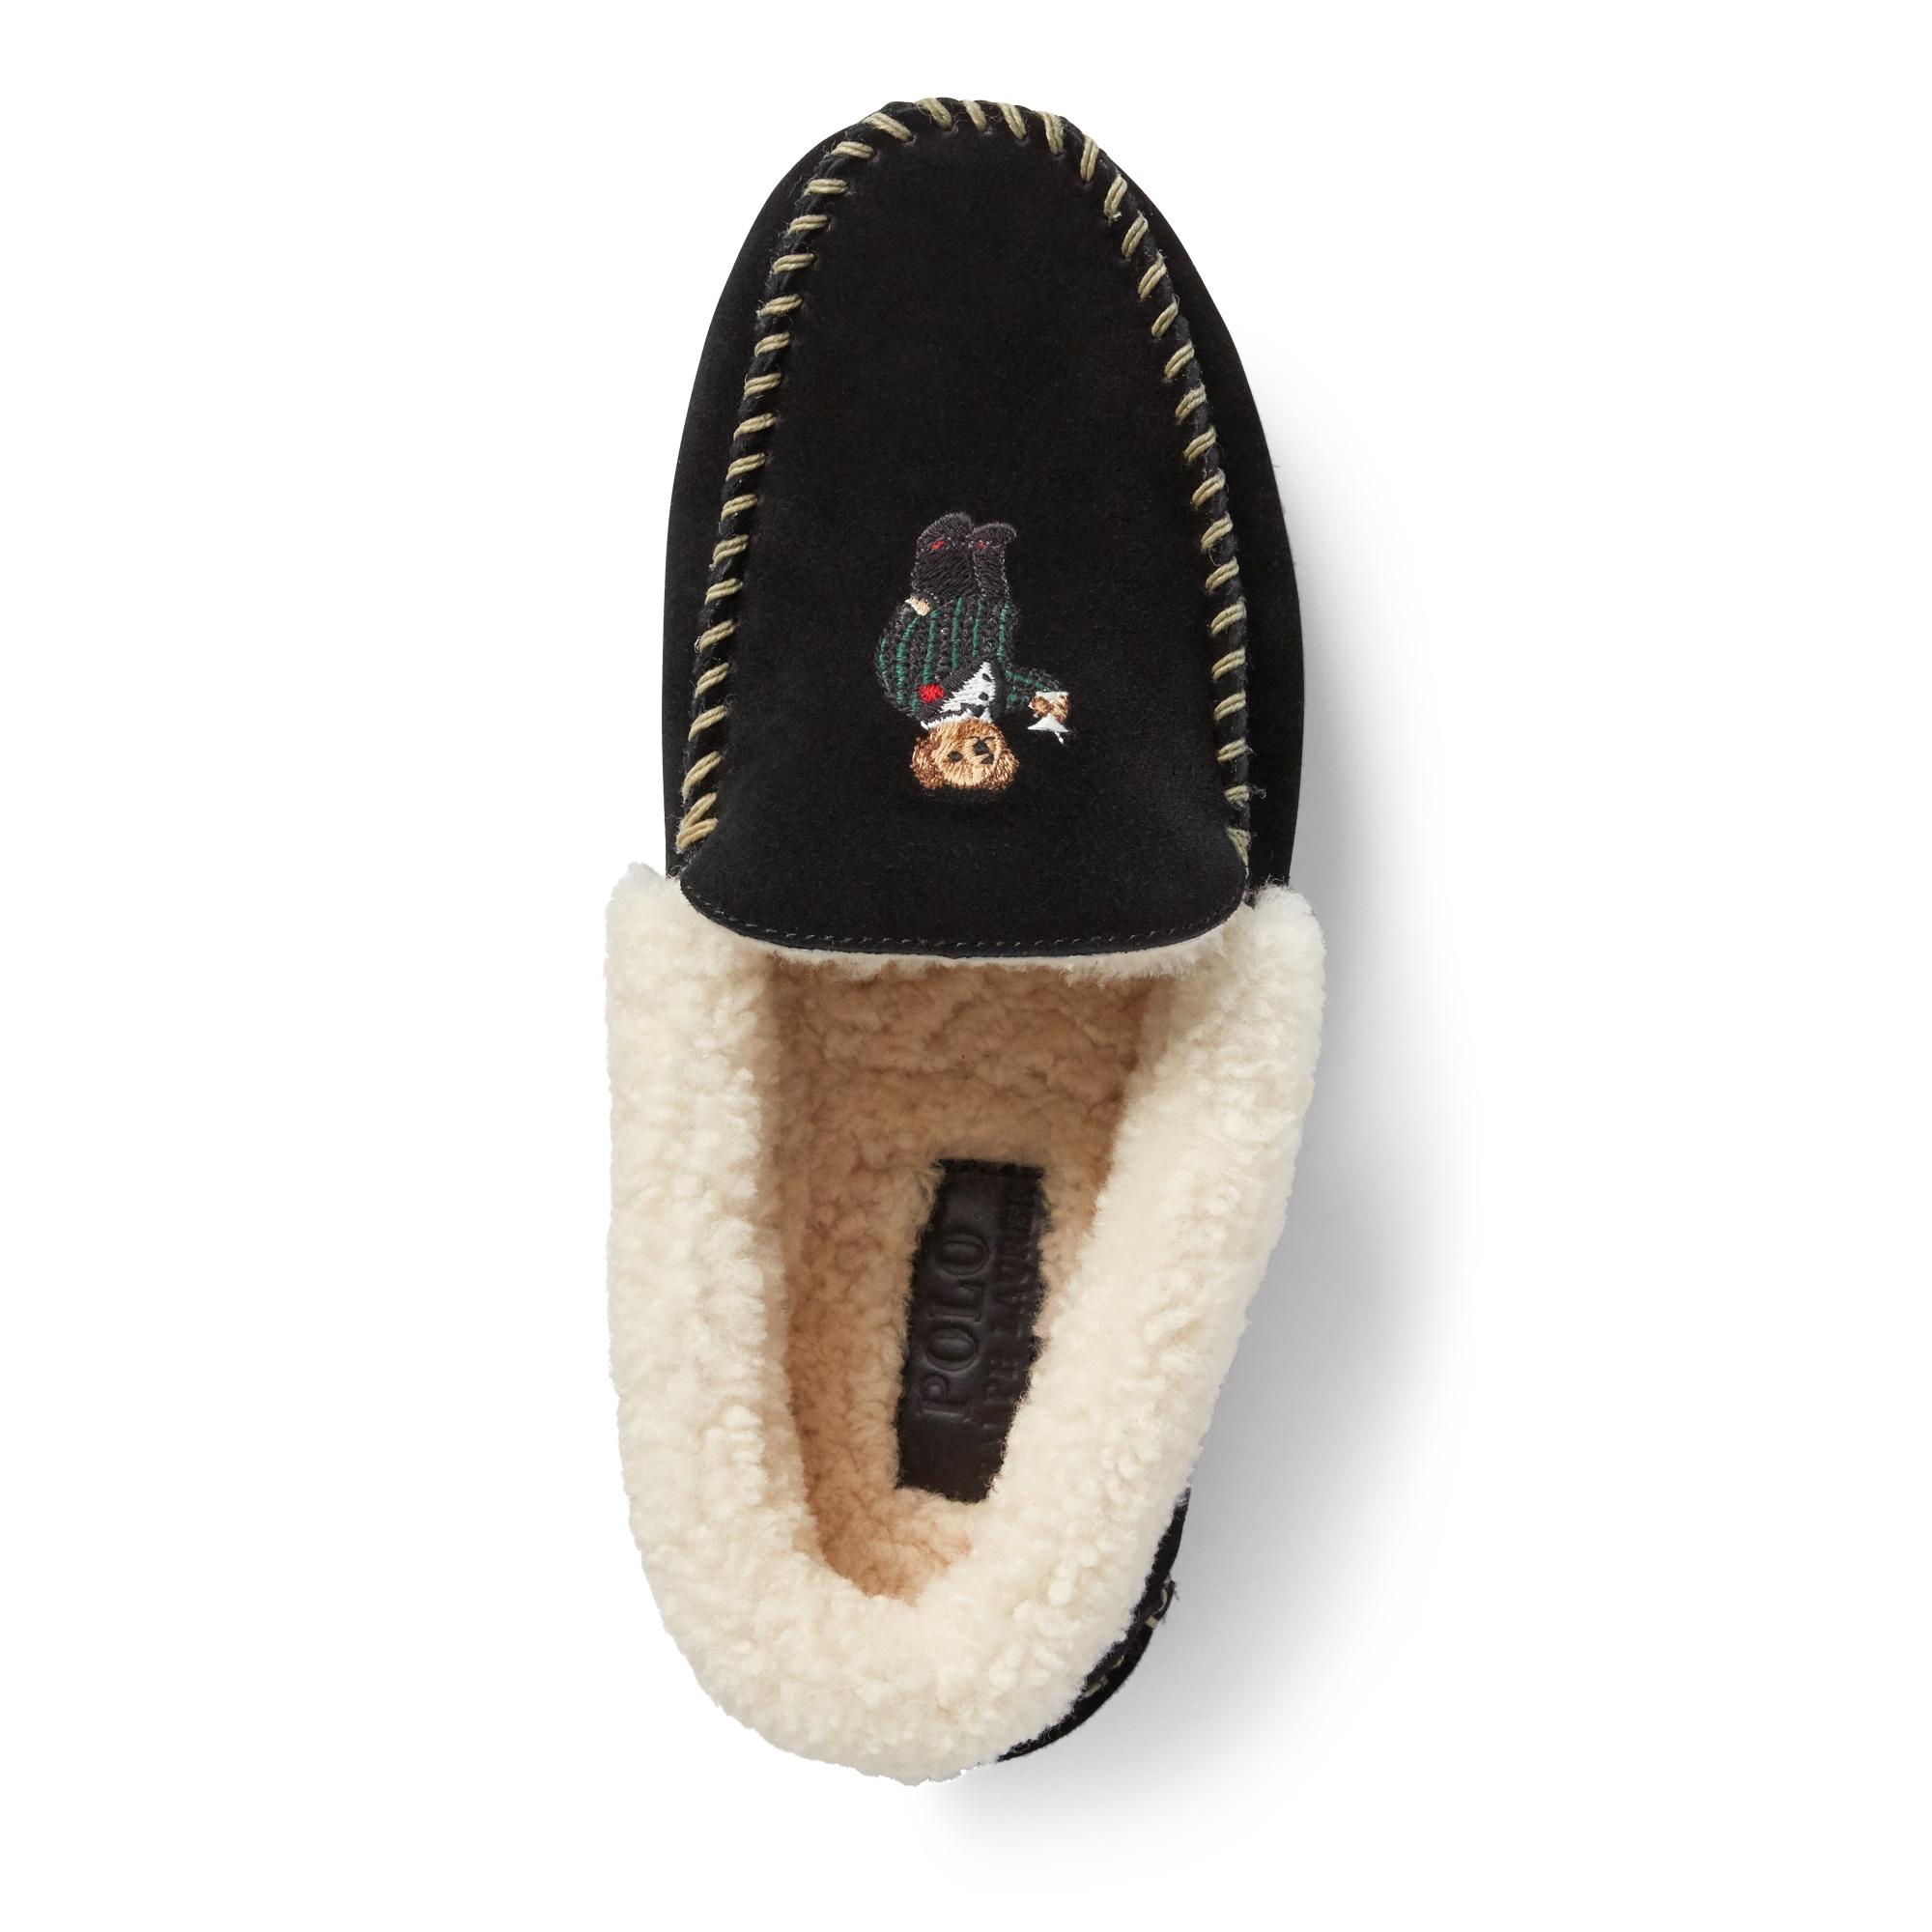 polo men's house slippers